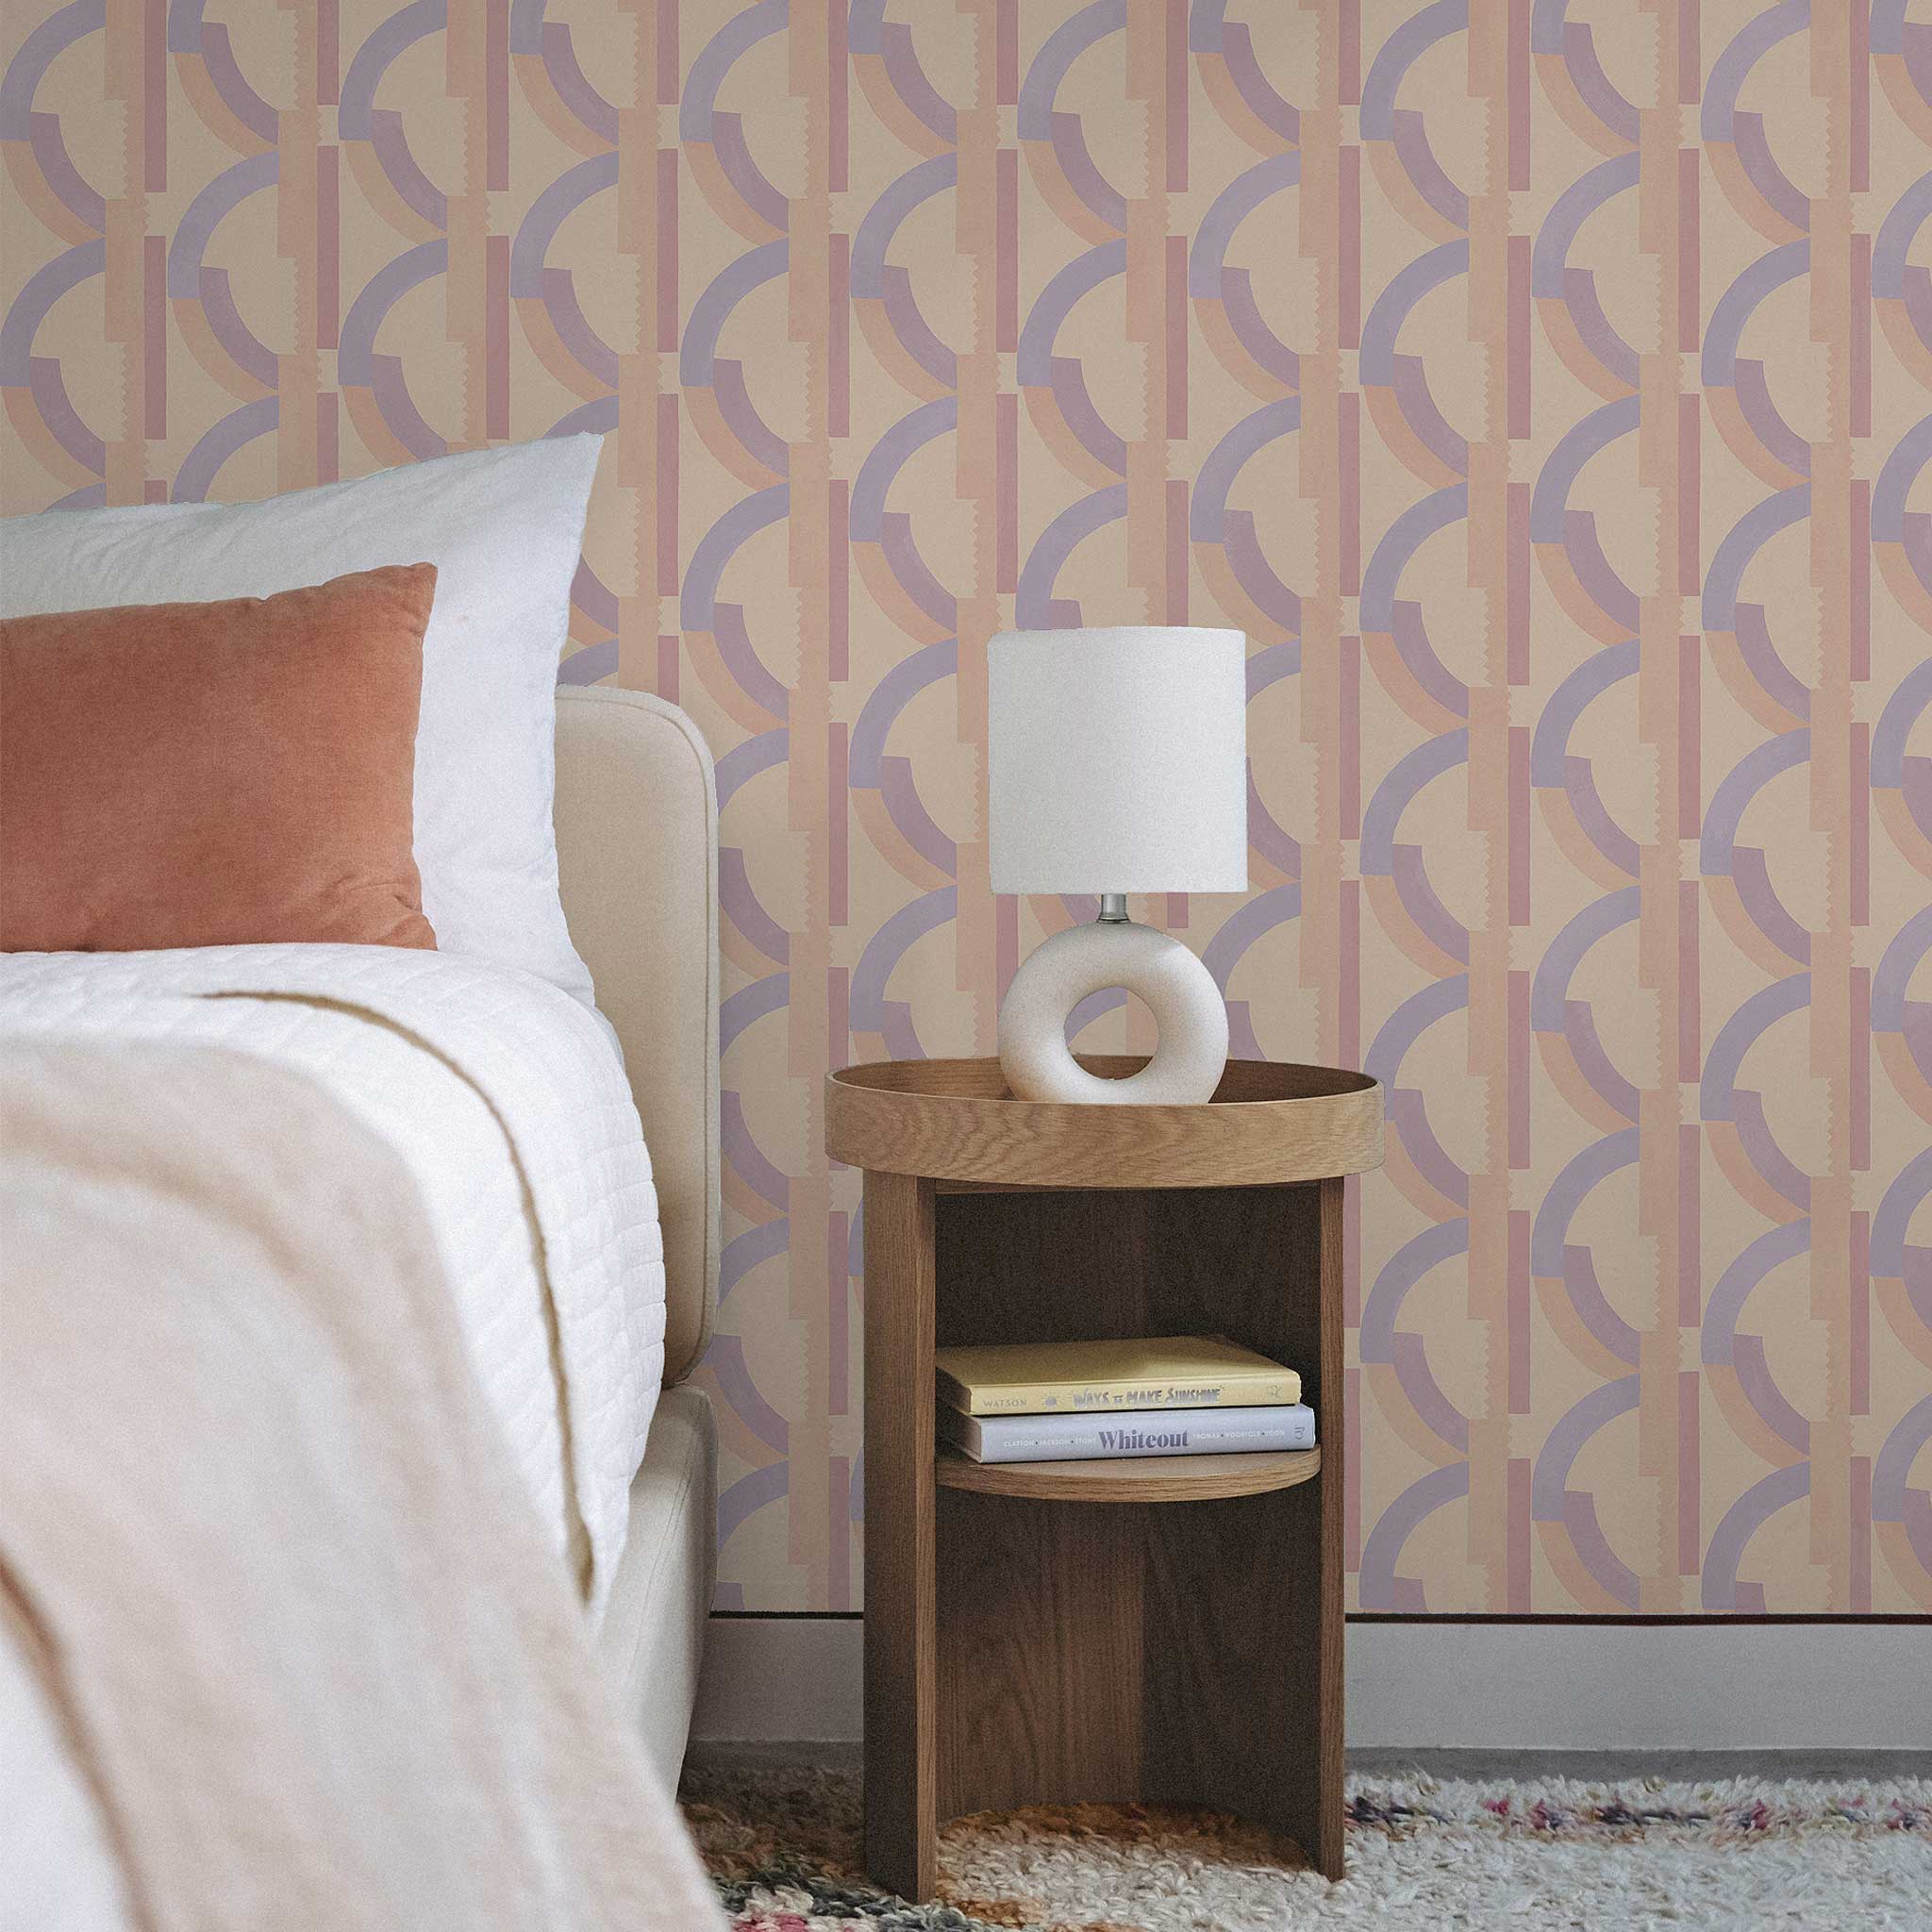 Habita wallpaper design - Lucie pattern in Peach in girl's bedroom